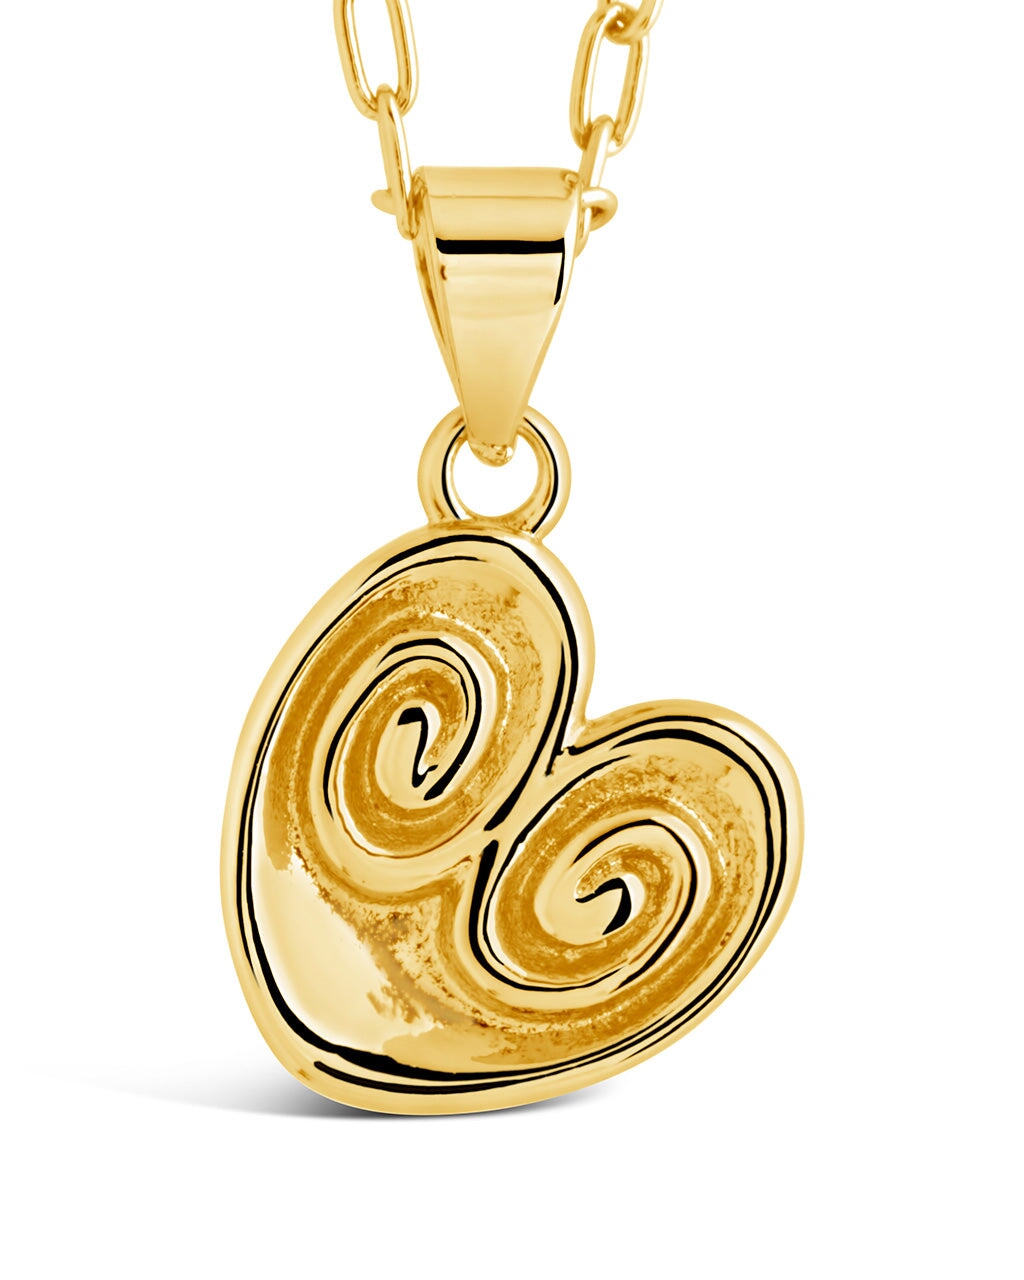 Palmier Pendant Necklace Necklace Sterling Forever Gold 